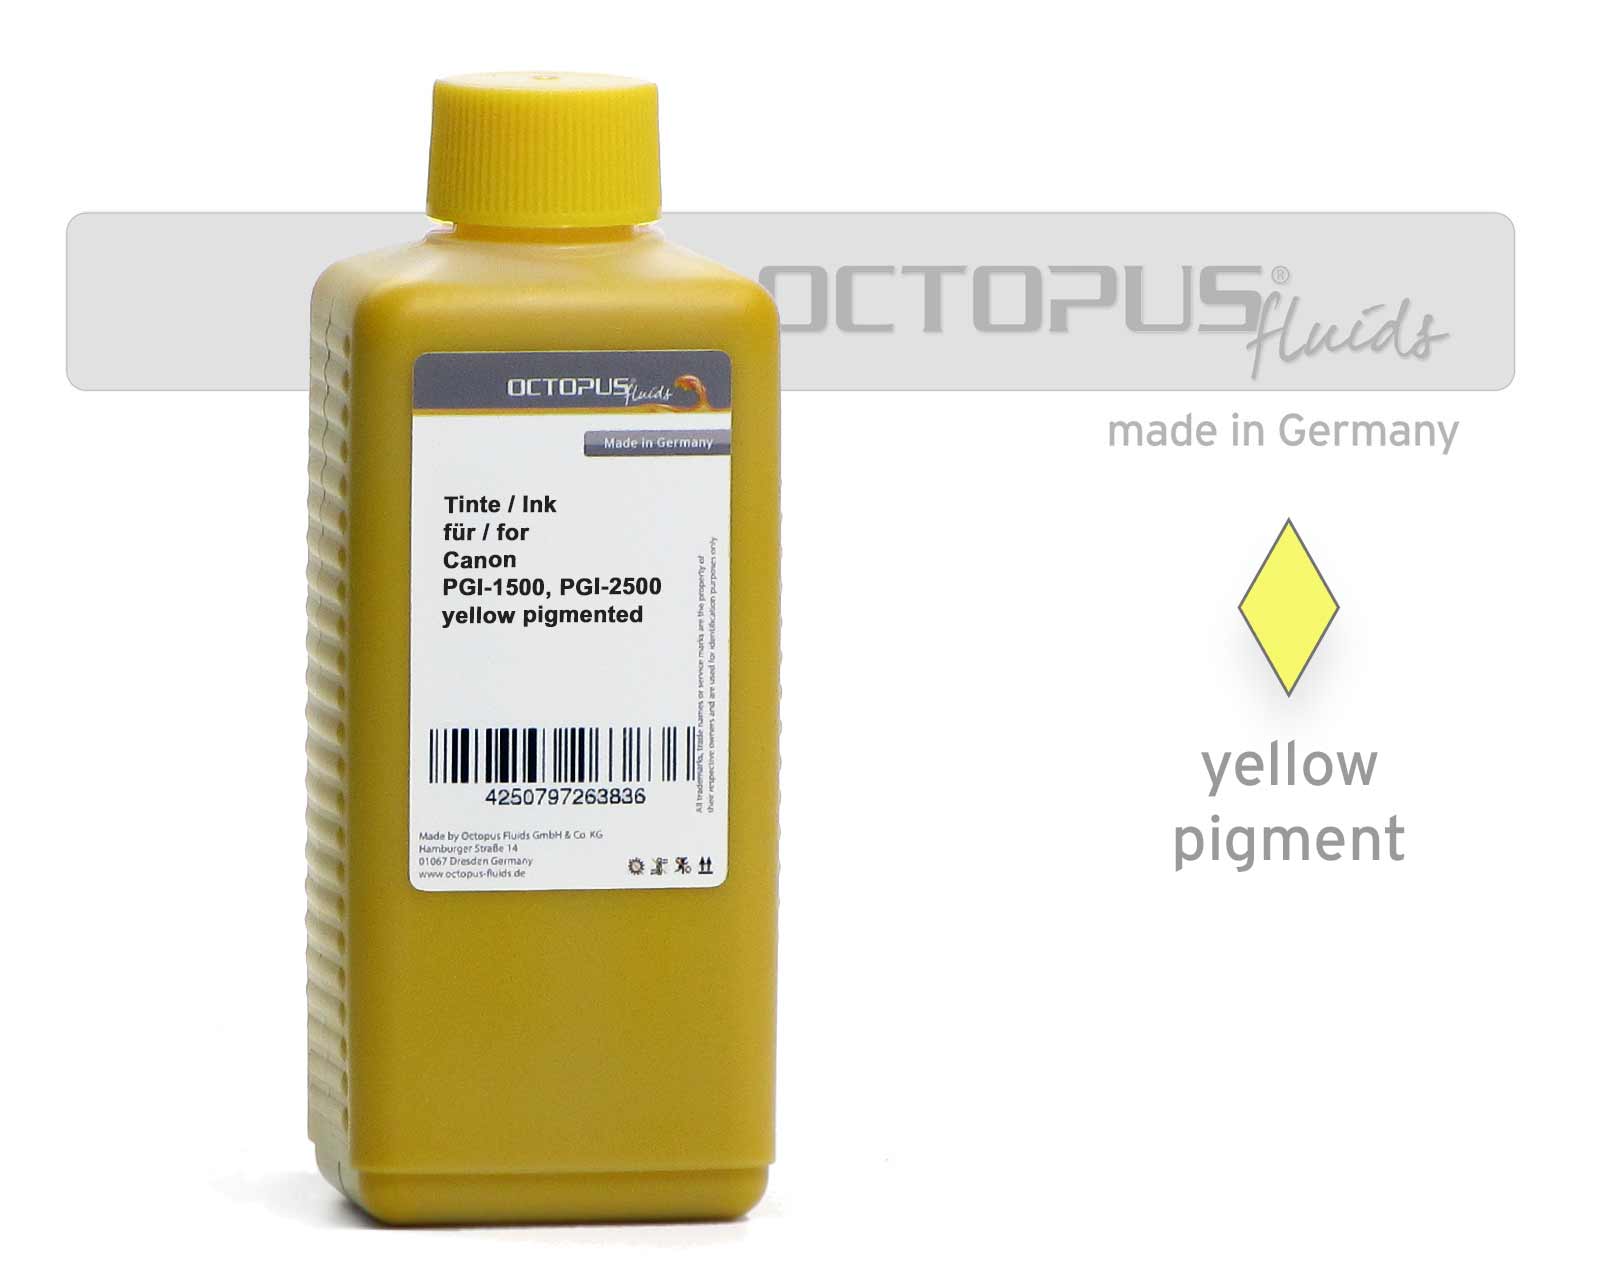 
Refill ink for Canon PGI-1500, PGI-2500 yellow pigmented